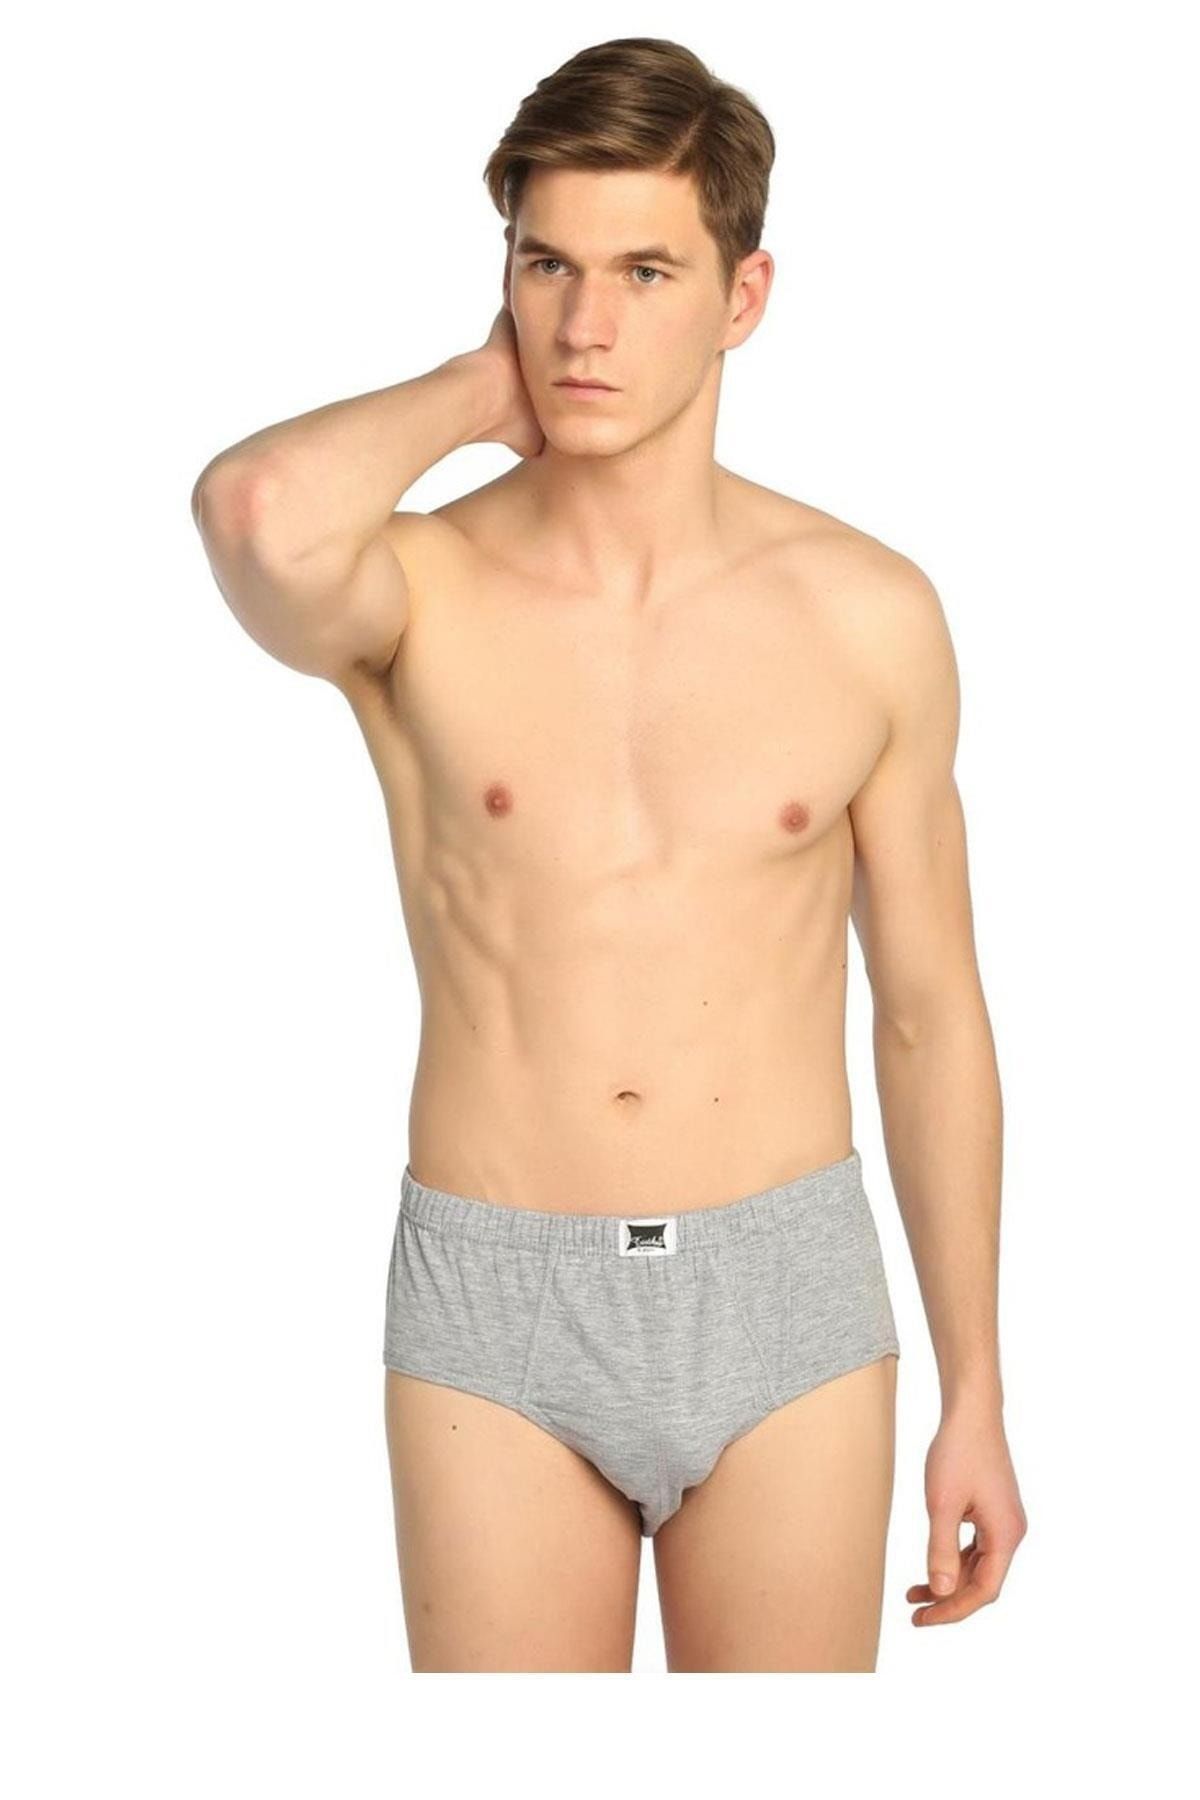 Tutku Iç Giyim Pamuklu Erkek Slip Külot 6 lı Paket